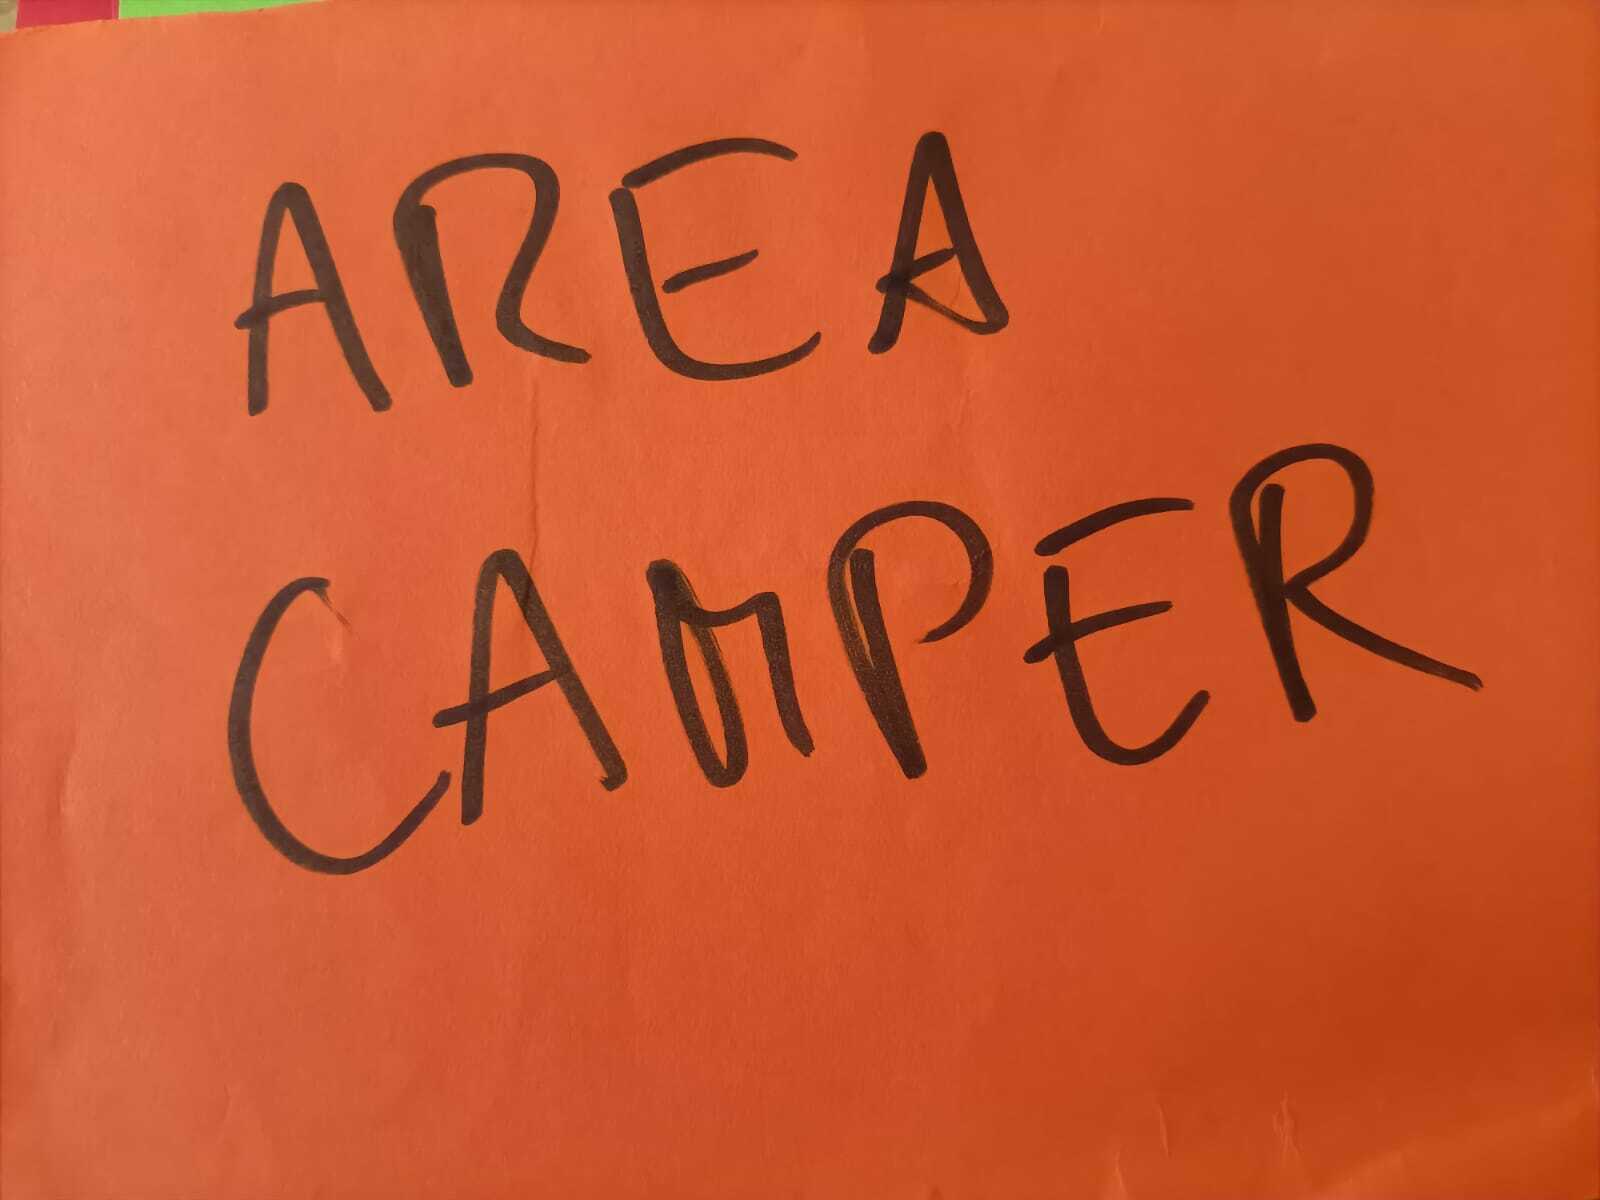 Area camper     